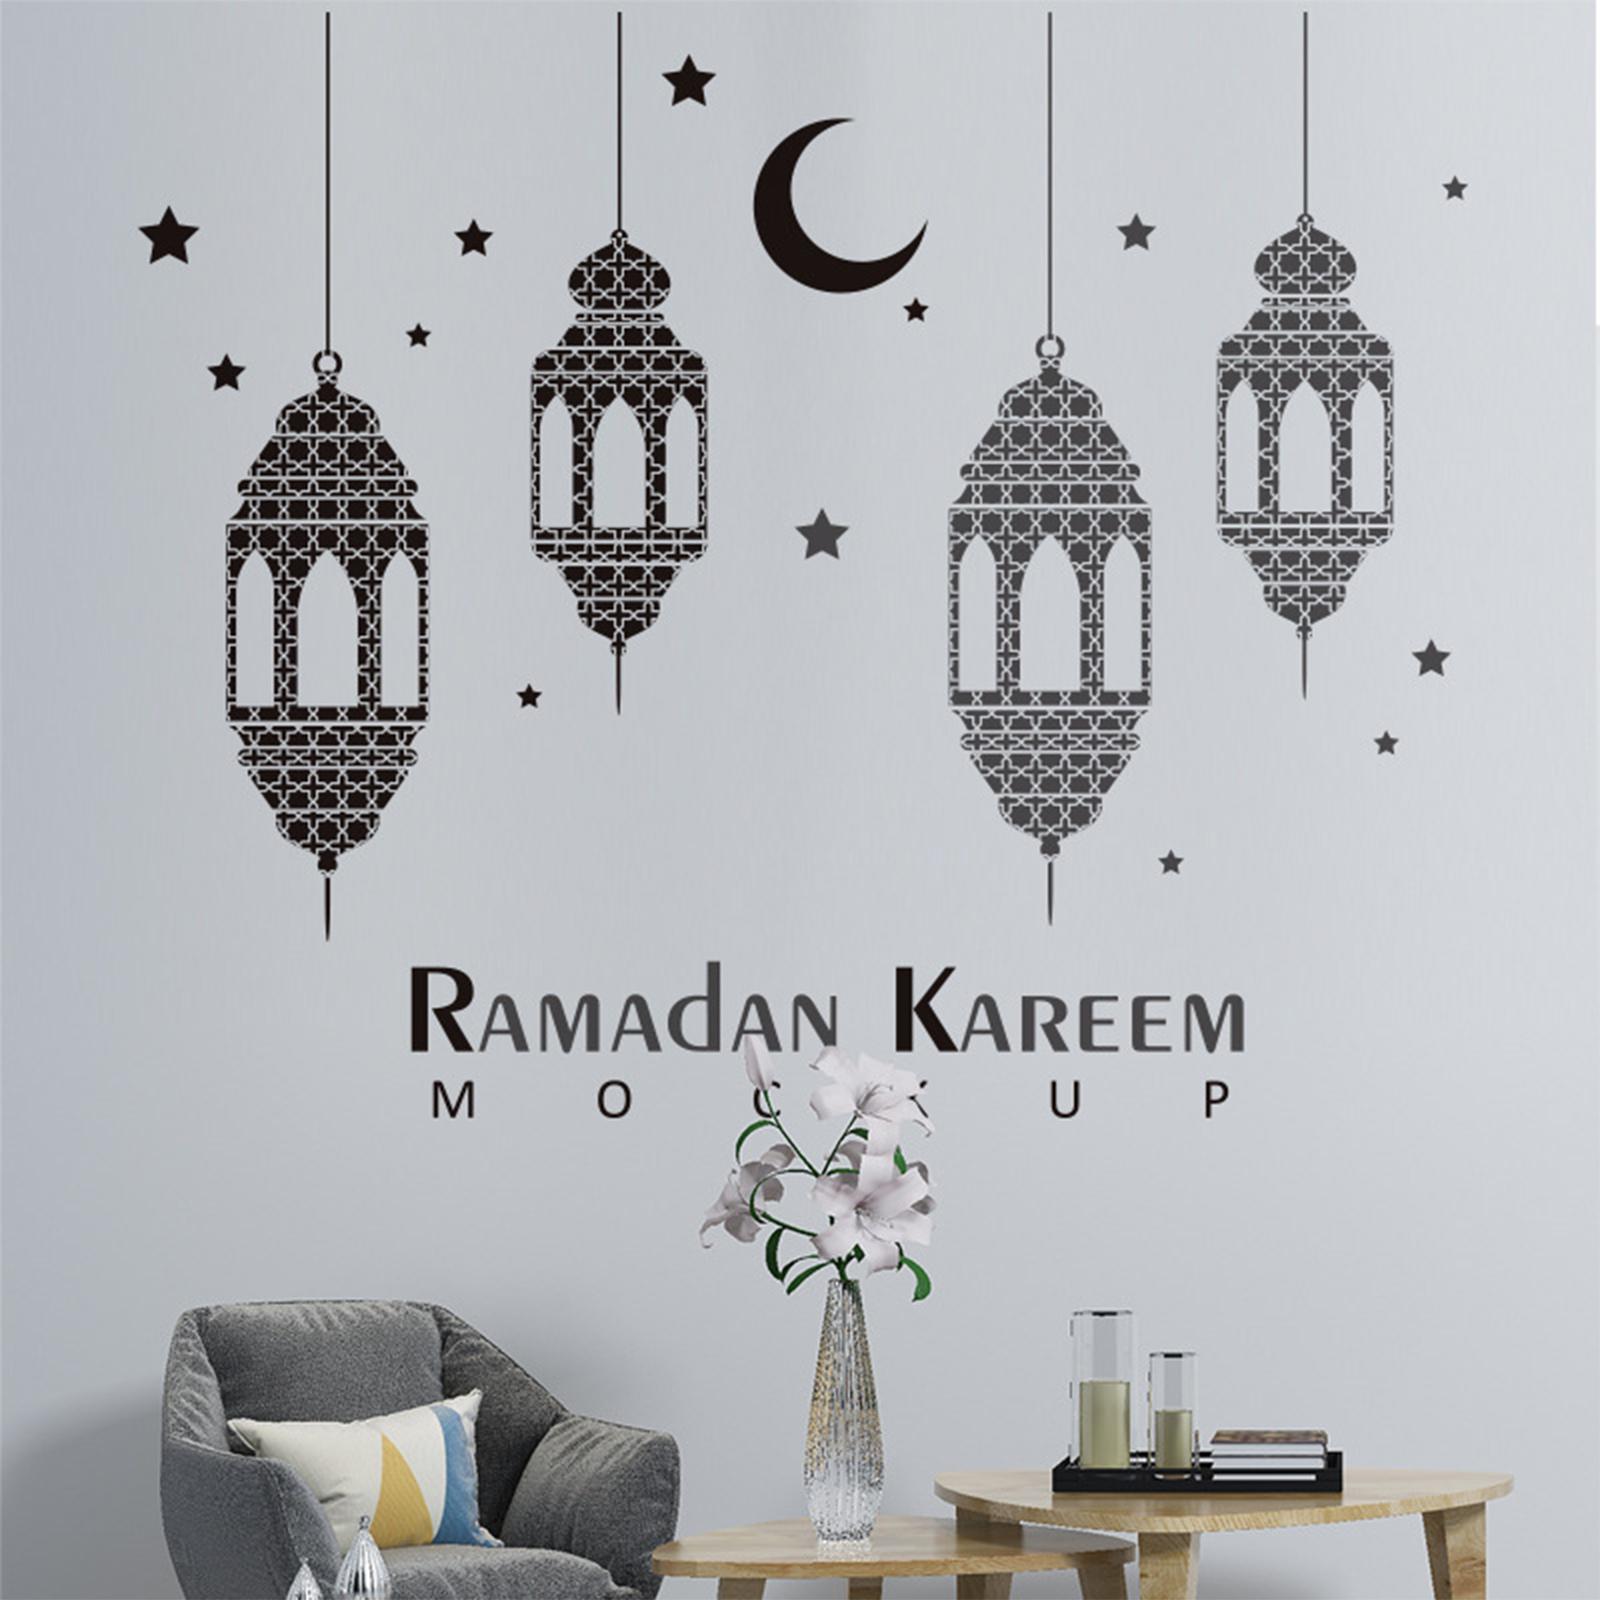 Ramadan Islamic Wall Stickers Party Supplies Wallpaper Window Sticker Art